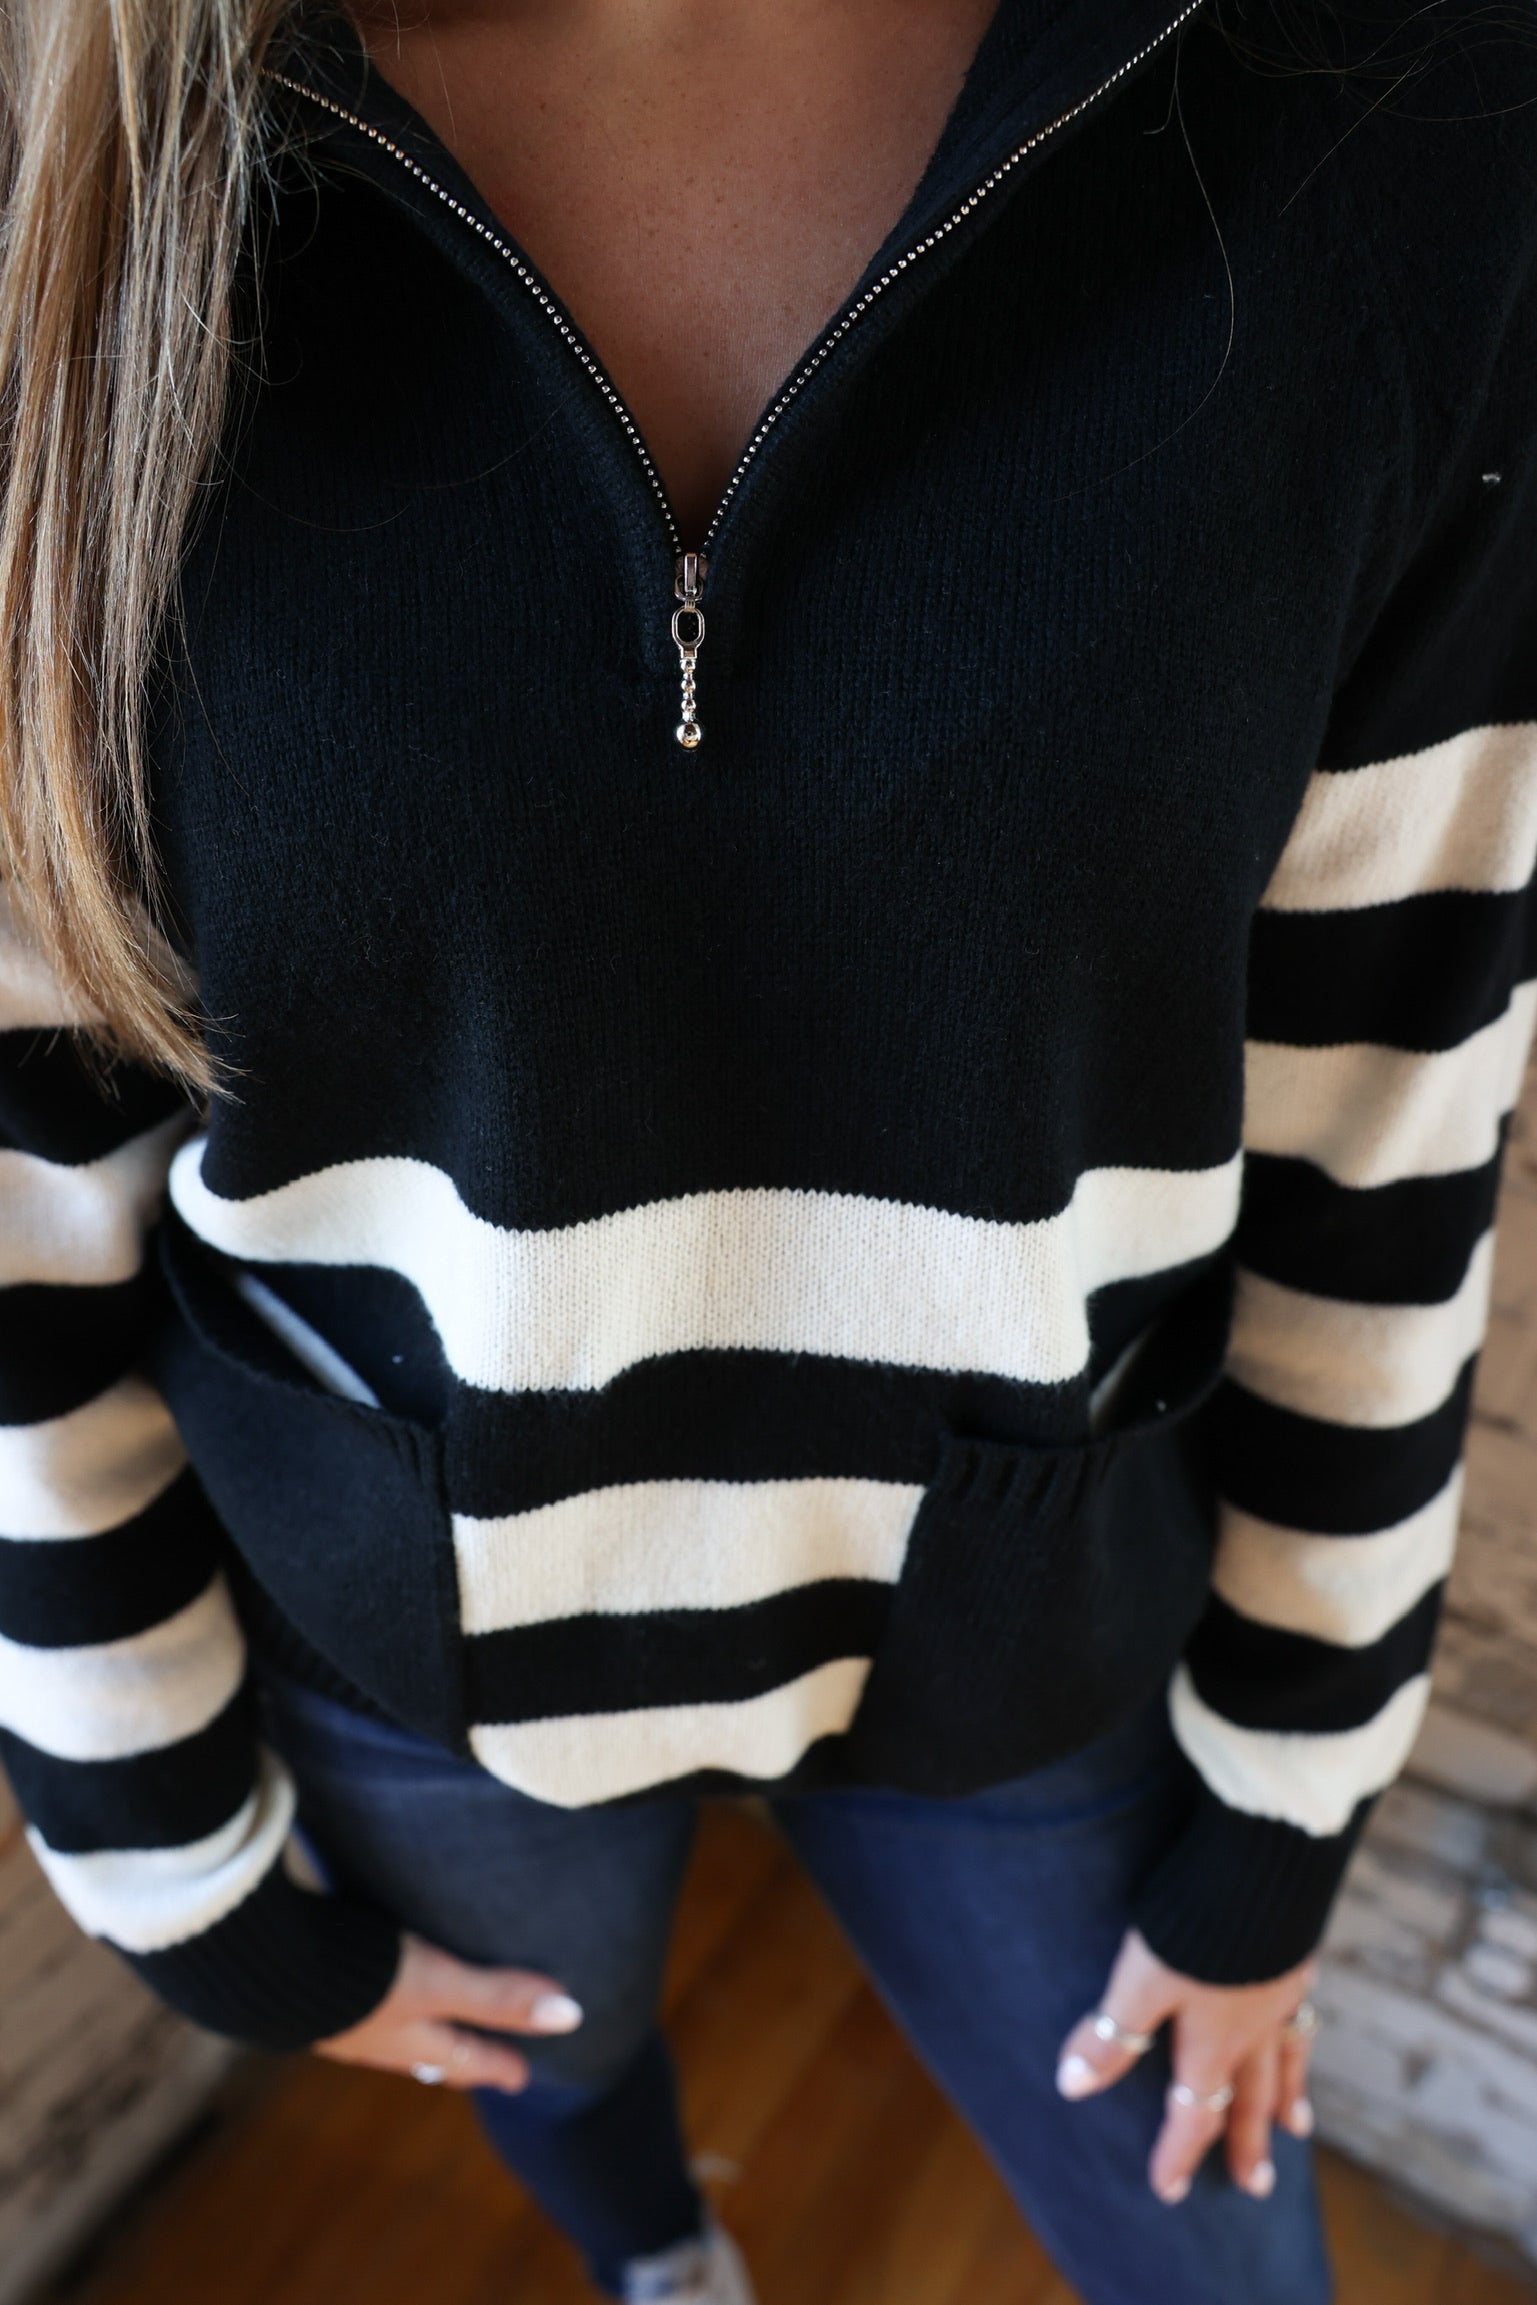 Lora's Zip Sweater (One Left - Size L)